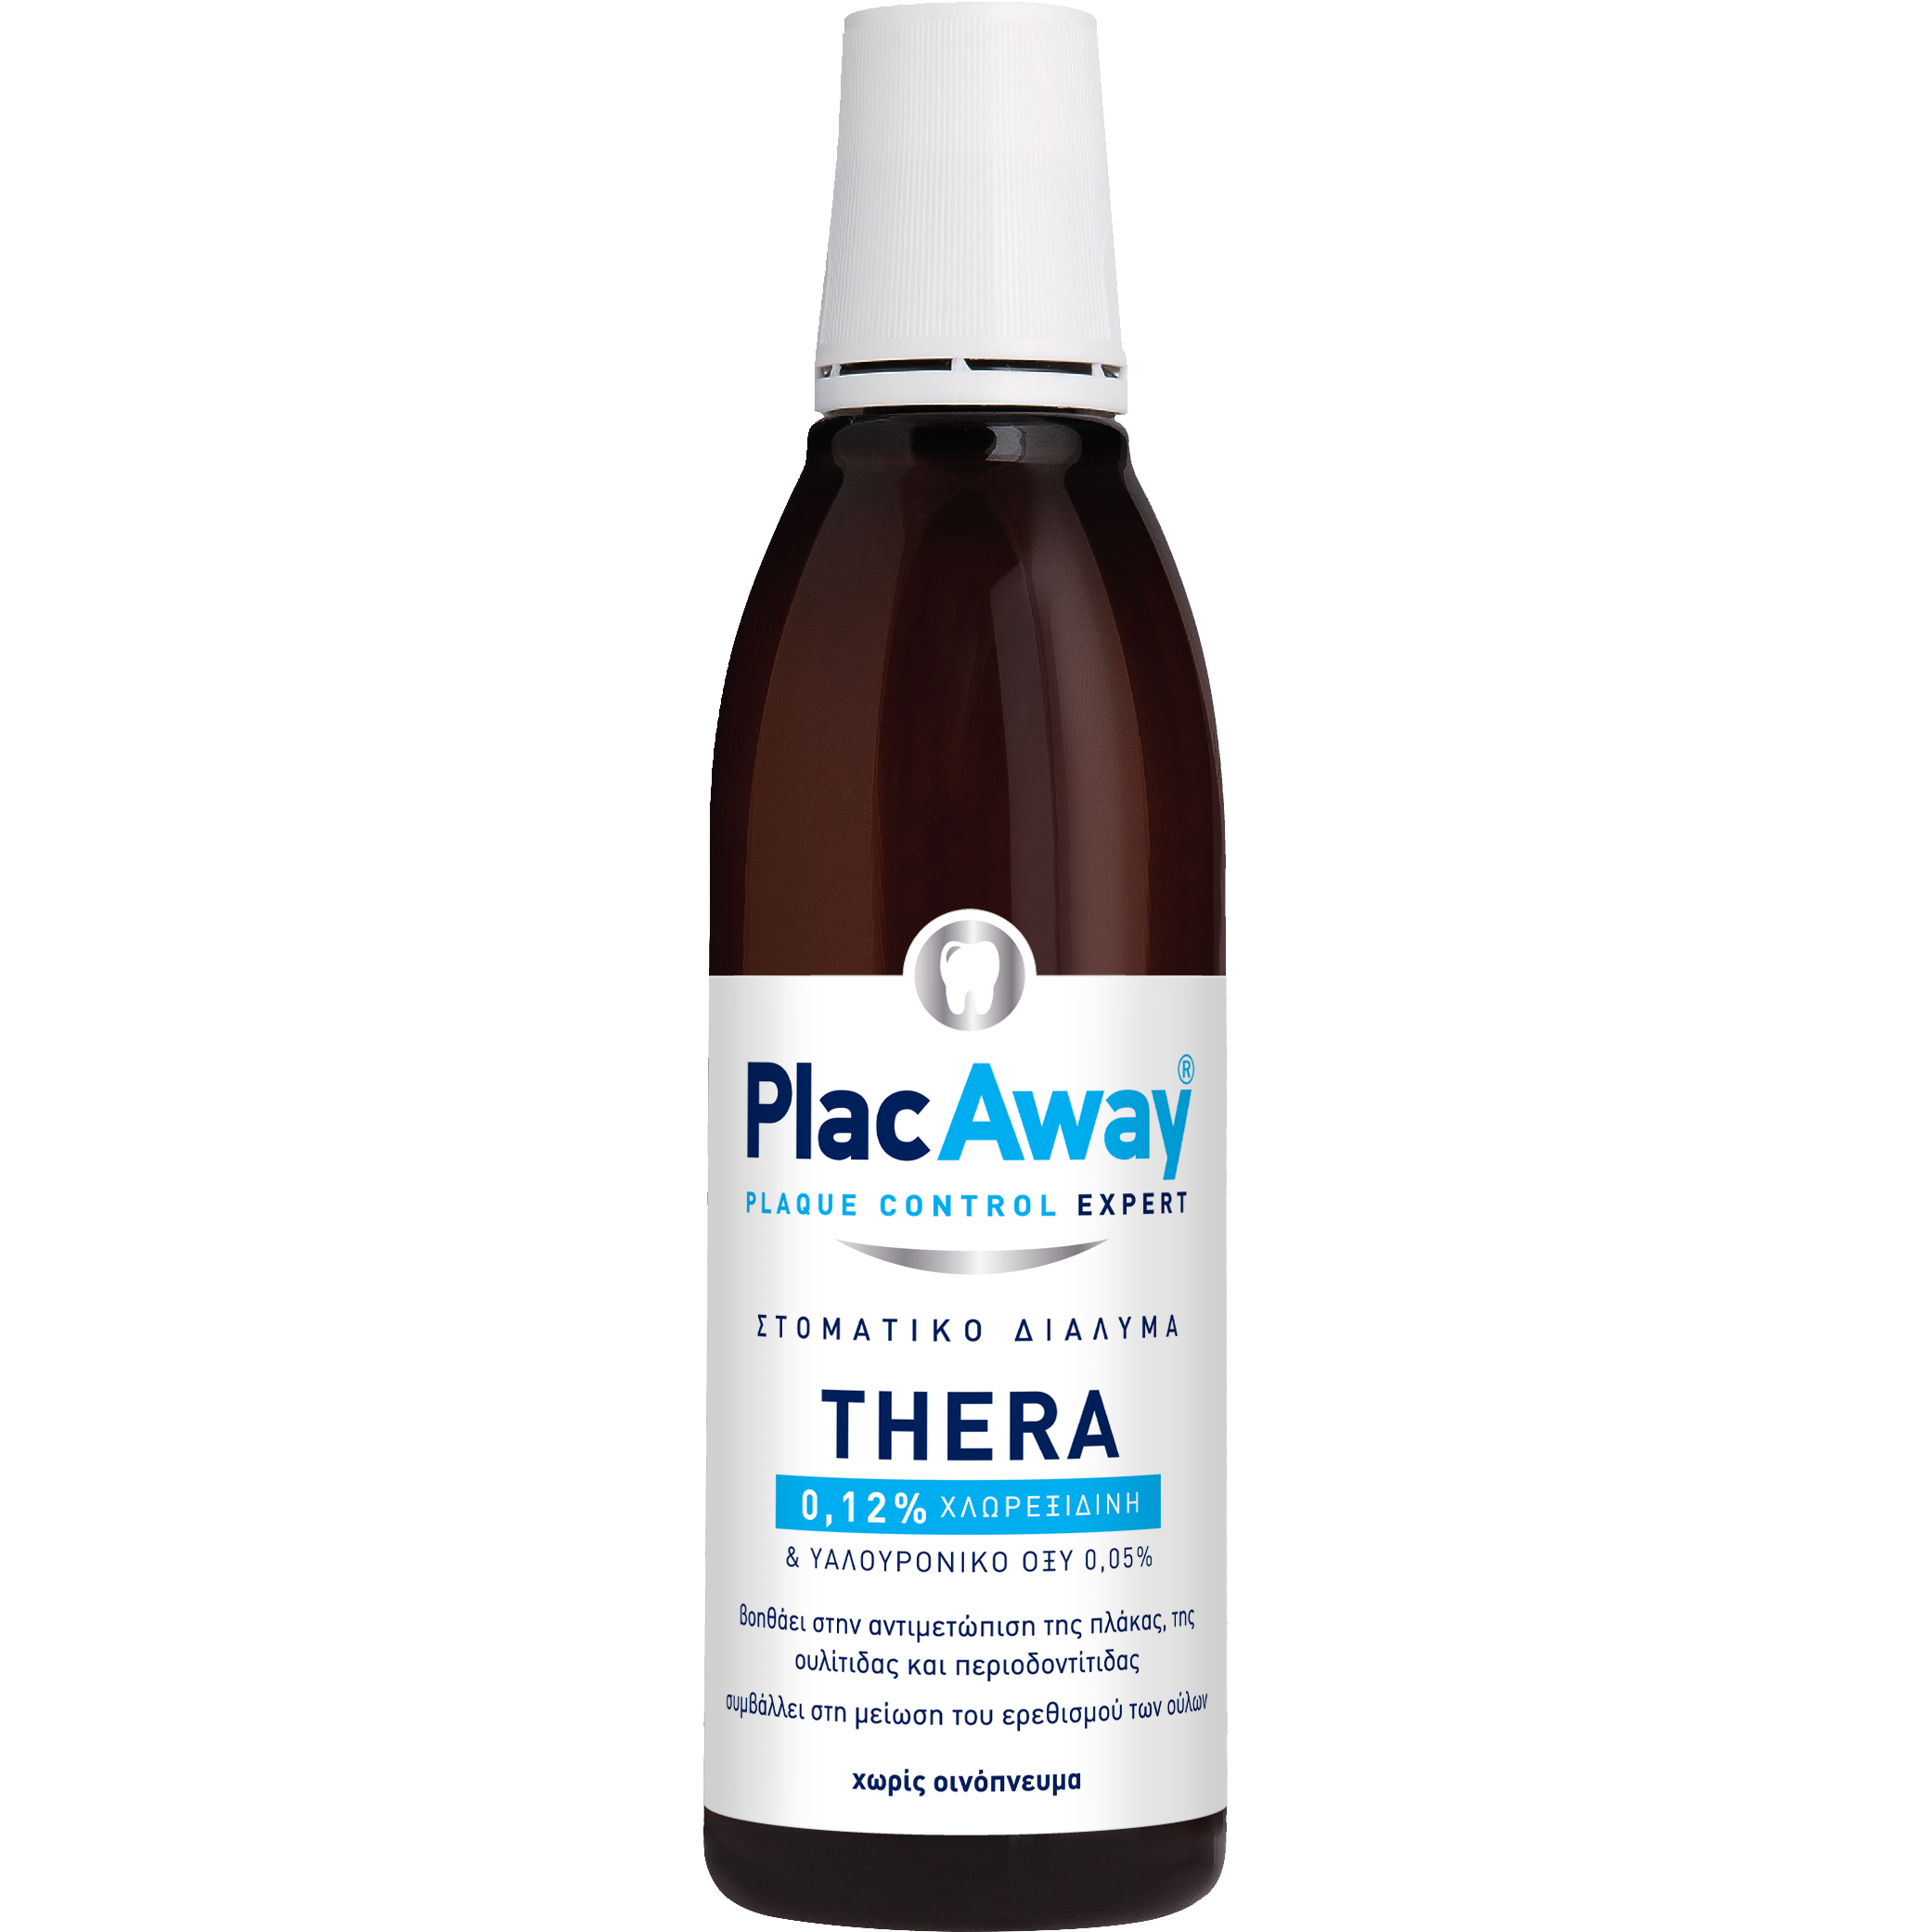 Plac Away Thera Plus 0.12% Στοματικό Διάλυμα με Διγλυκονική Χλωρεξιδίνη, Εμποδίζει το Σχηματισμό της Μικροβιακής Πλάκας 250ml 13544